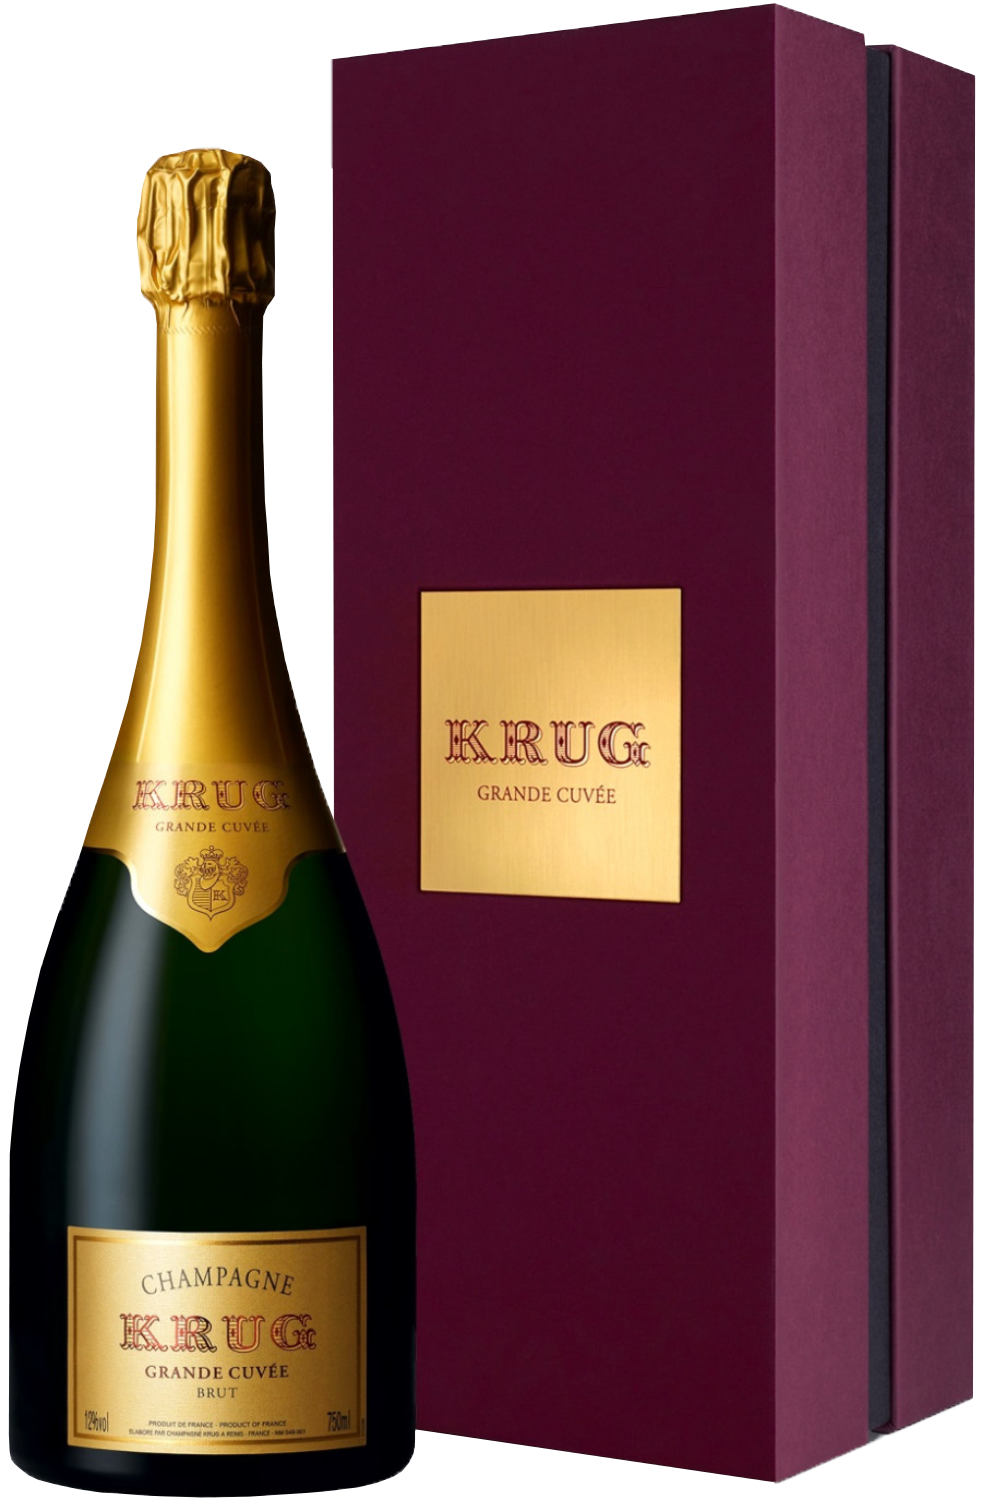 instinct cuvee de millenaire brut saumur aoc bouvet ladubay gift box Krug Grande Cuvee Brut Champagne AOC (gift box)